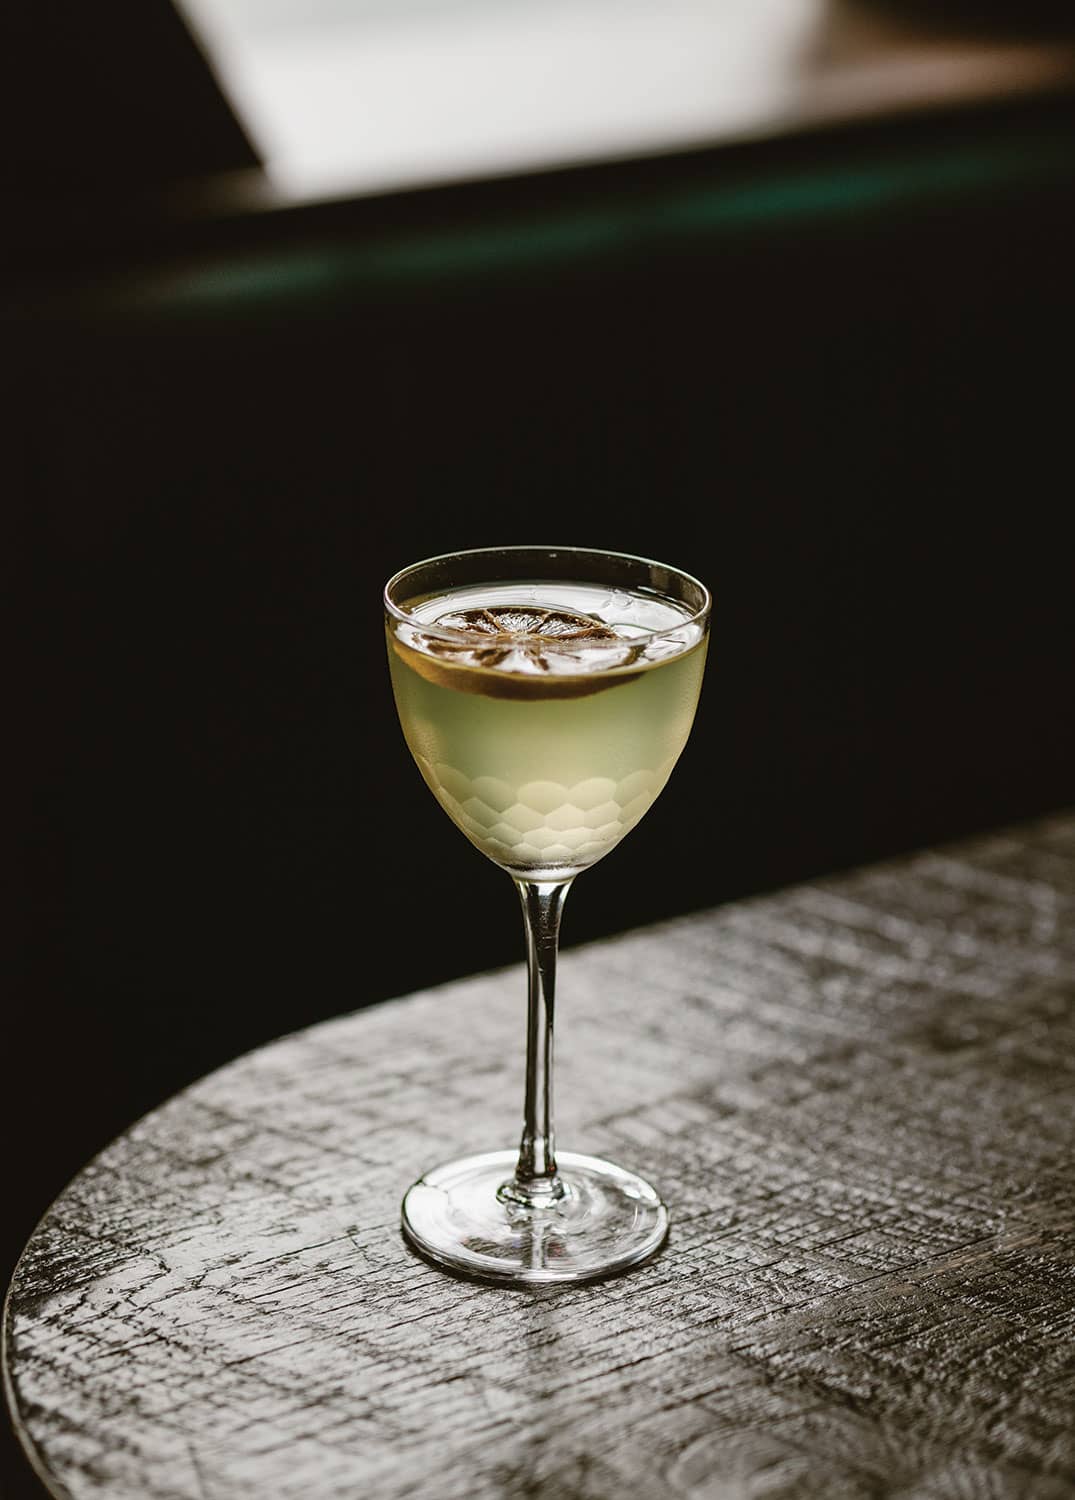 Josh Ibanez's Long Story Short tropical martini